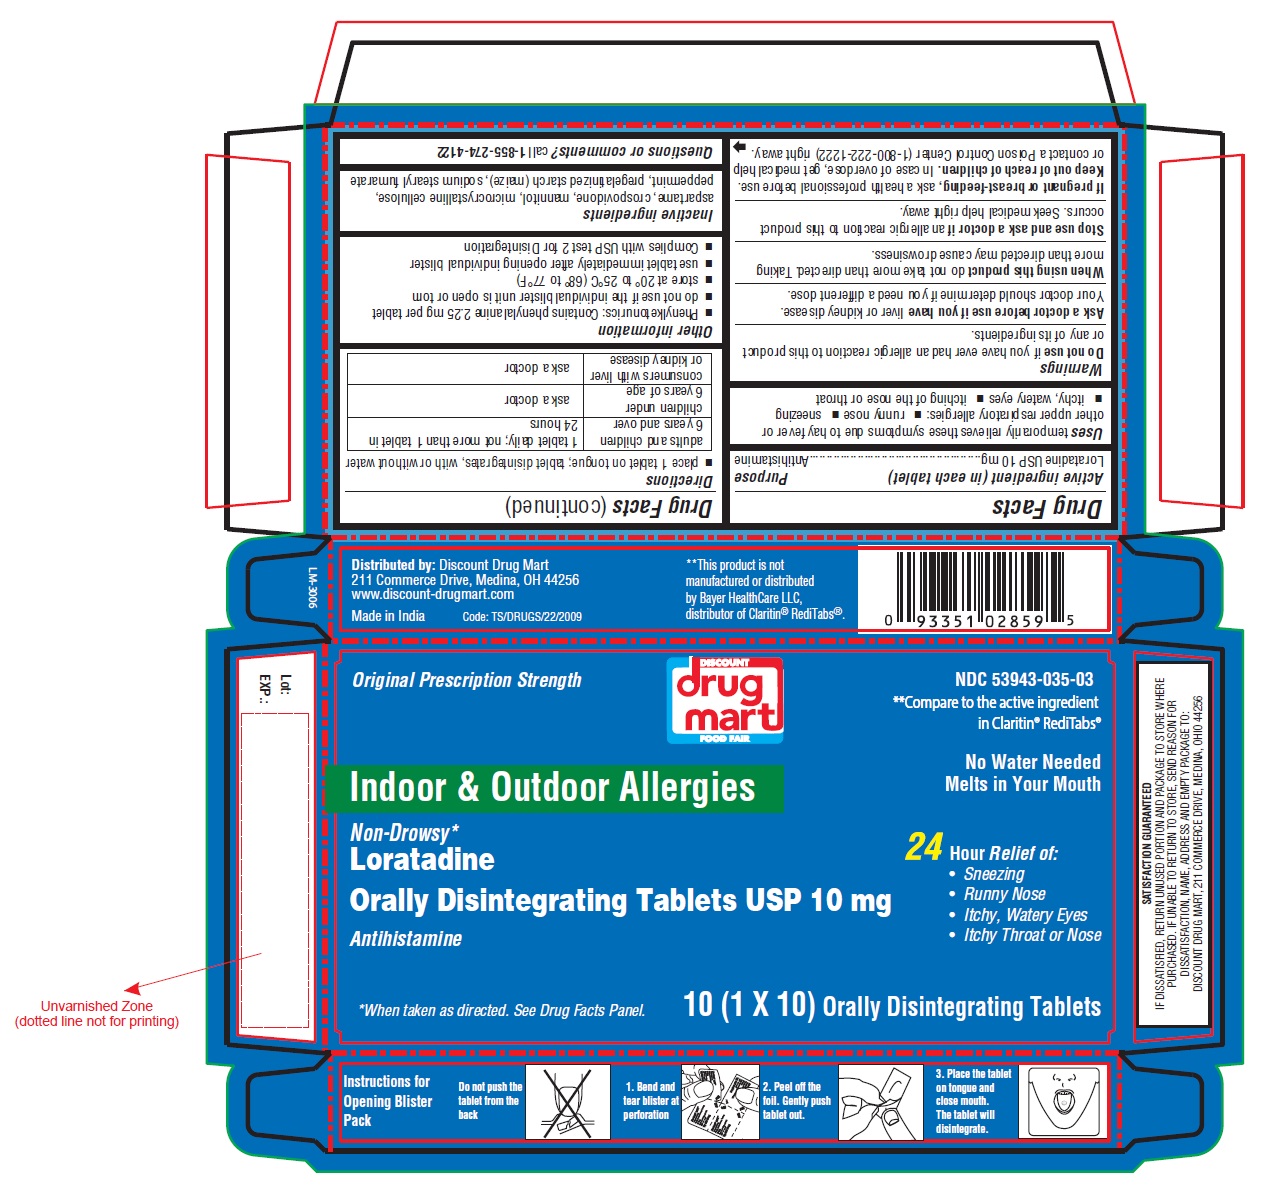 PACKAGE LABEL-PRINCIPAL DISPLAY PANEL - 10 mg, Blister Carton 10 (1 x 10) Orally Disintegrating Tablets